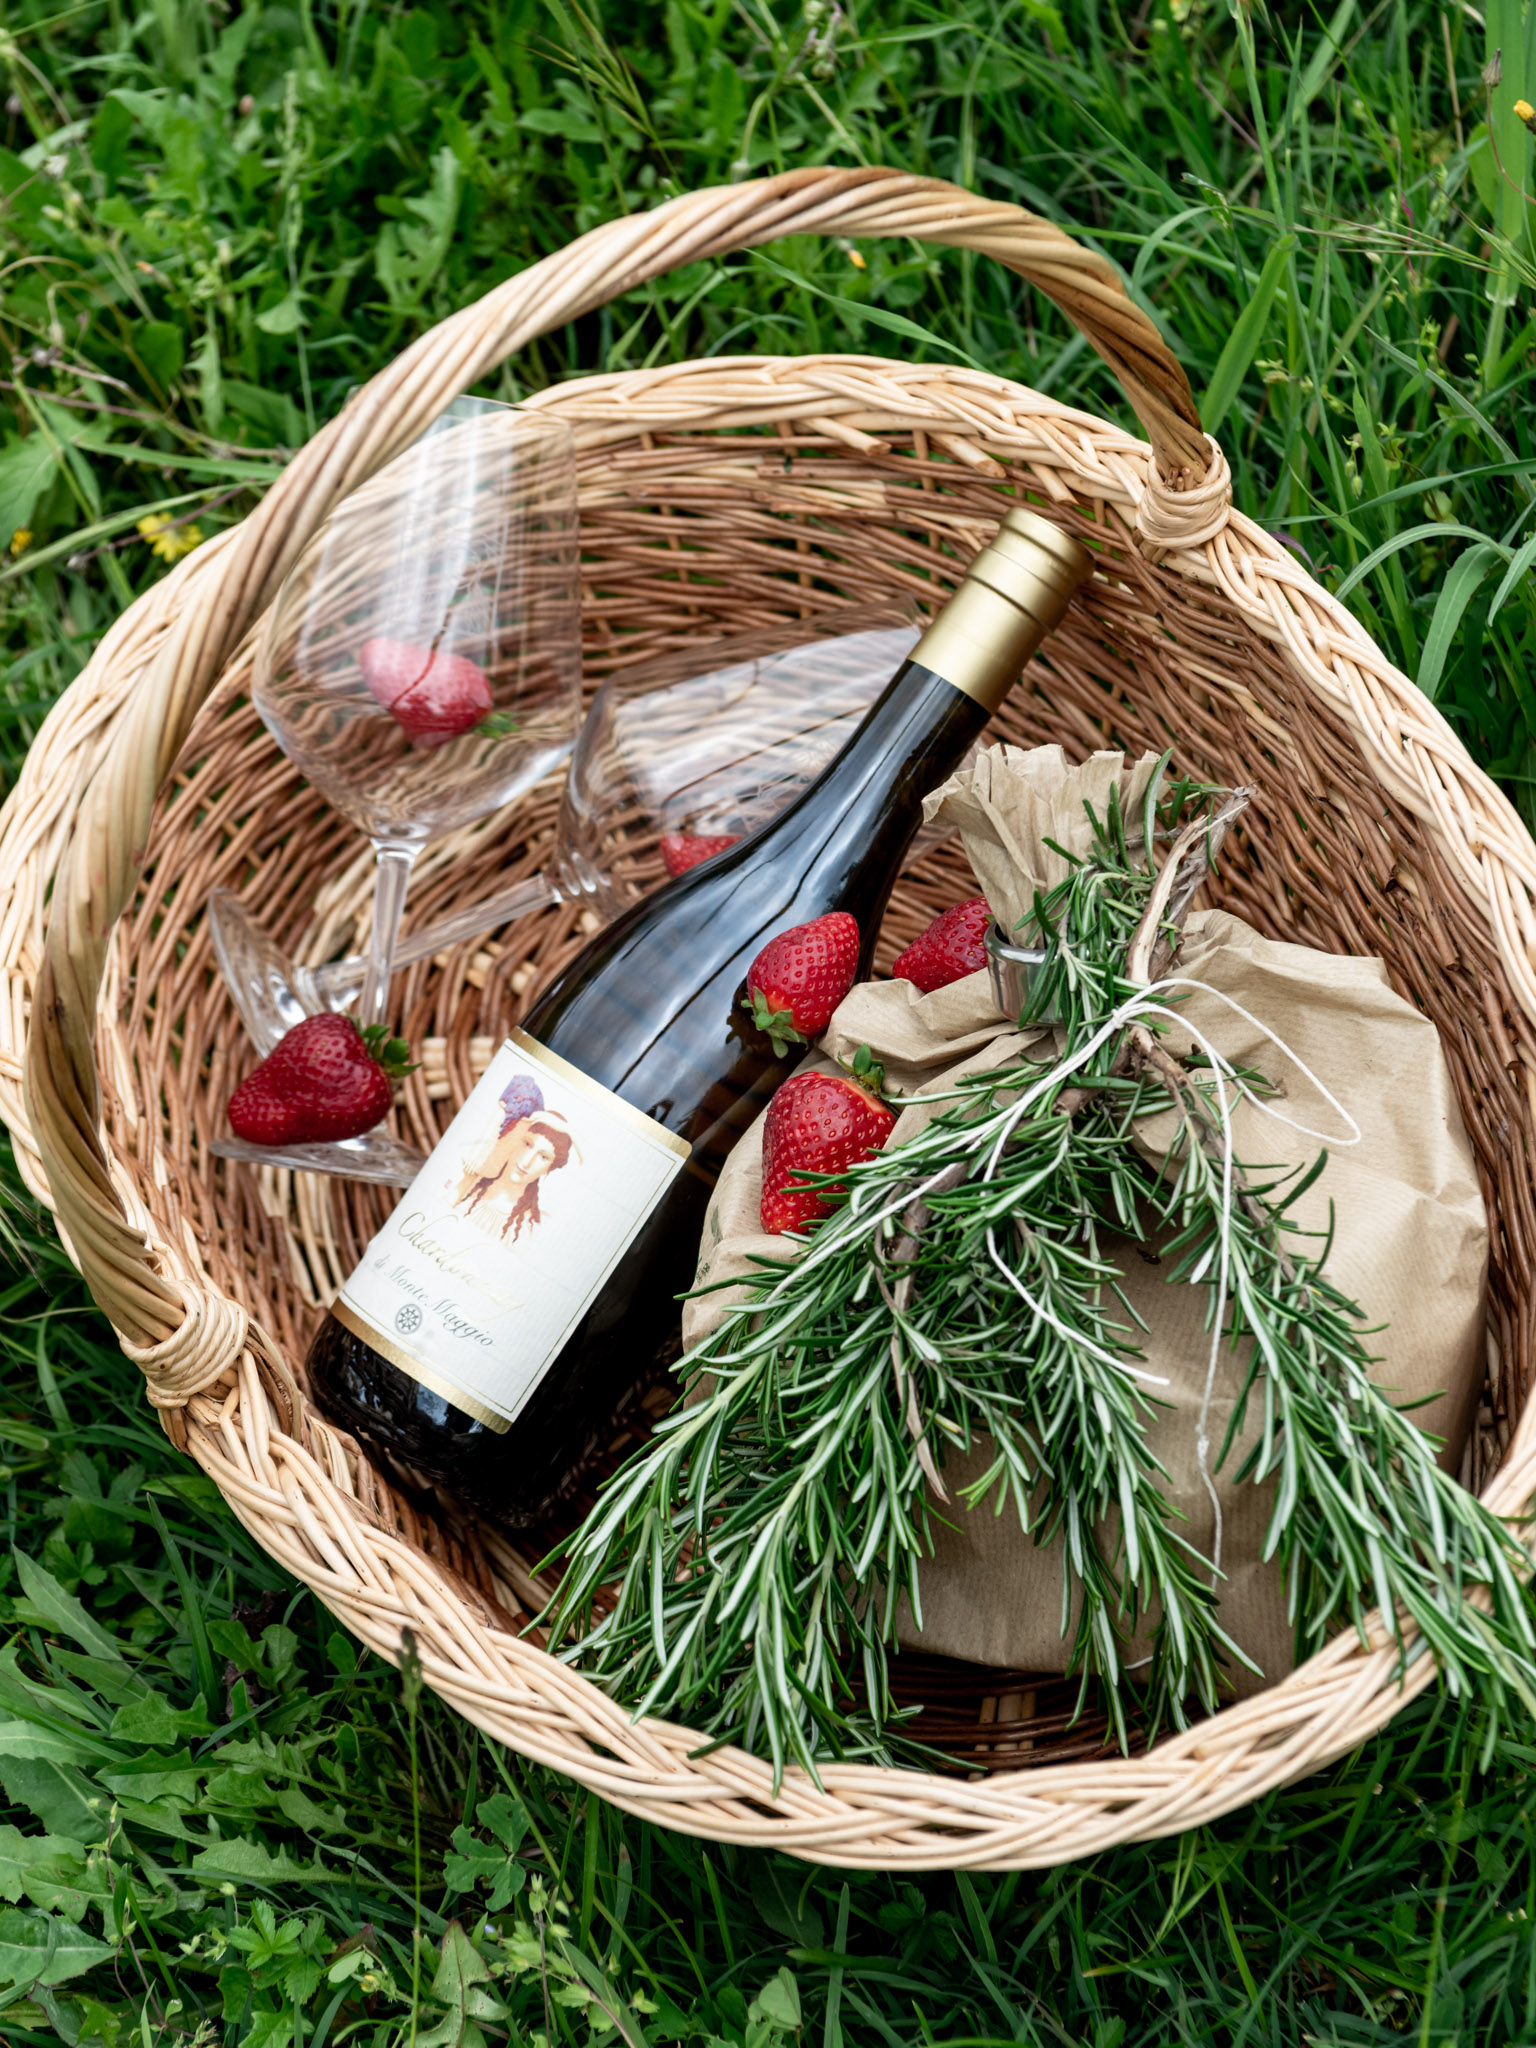 Chardonnay di Montemaggio is a white organic Tuscan wine